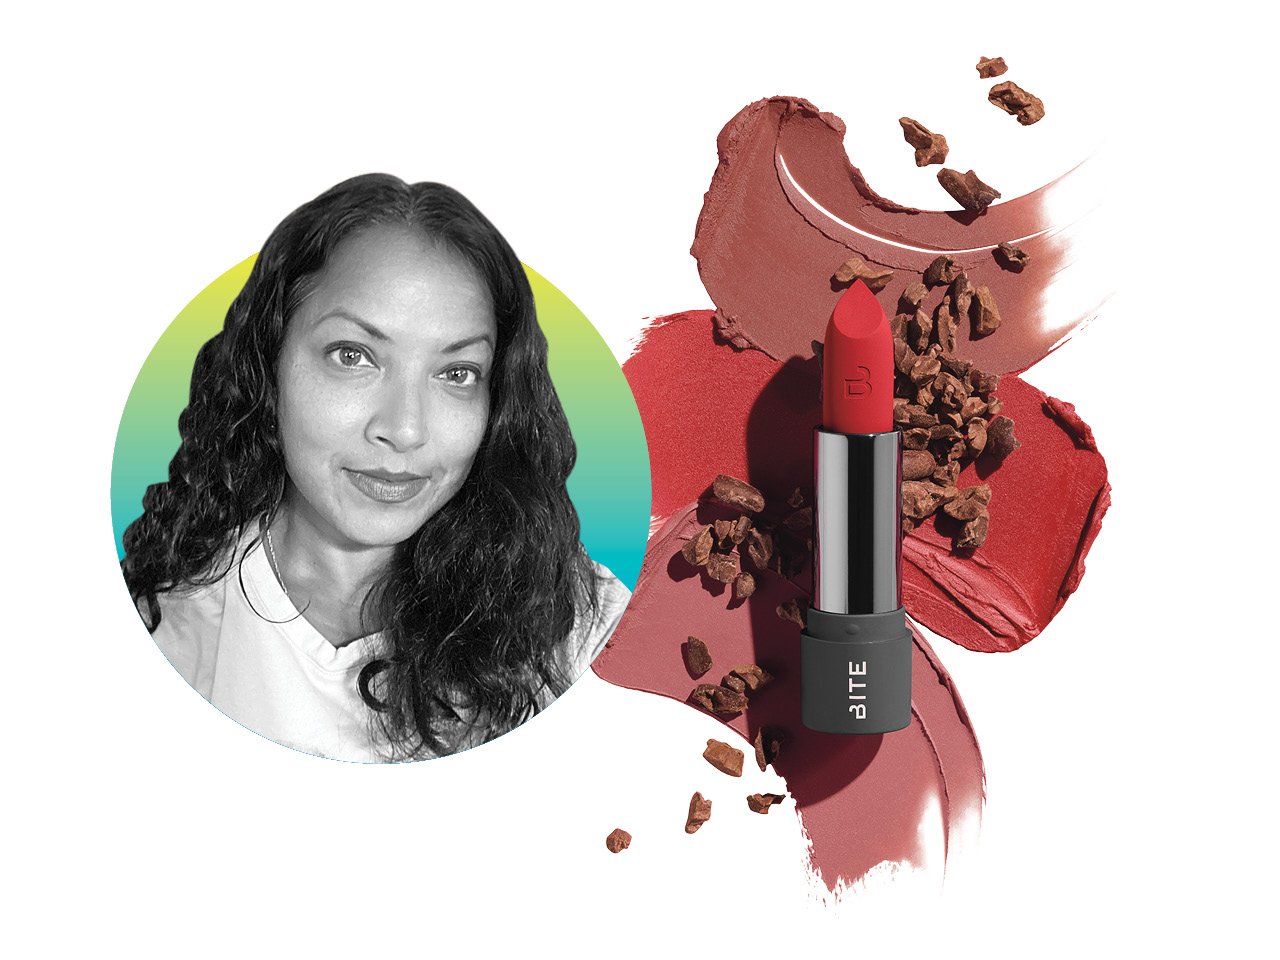 A Chatelaine reader reviews the Bite Beauty Powermove Matte lipstick.